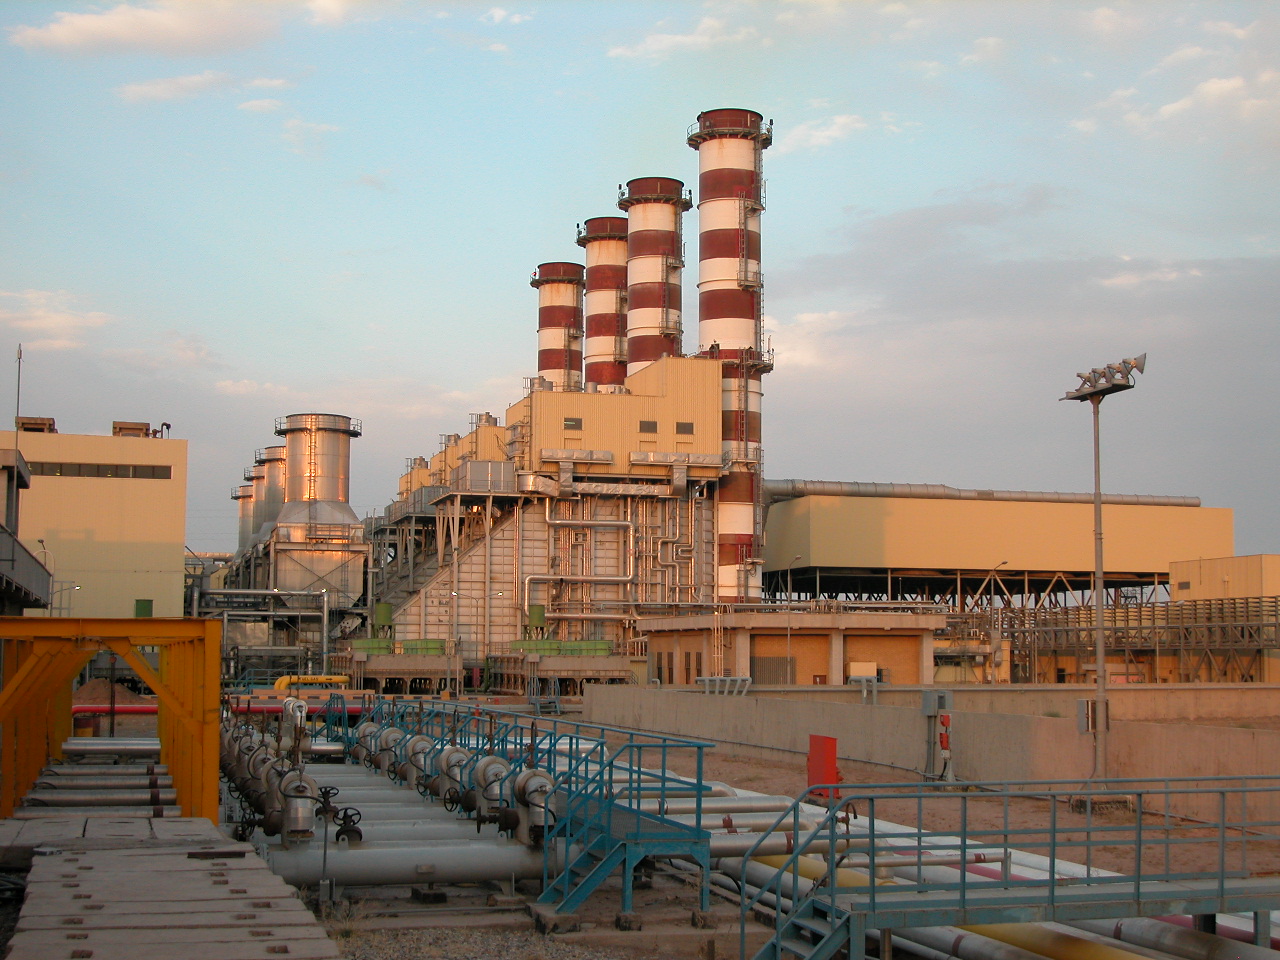 Iran Gov't Divesting Stake in Thermal Power Plants